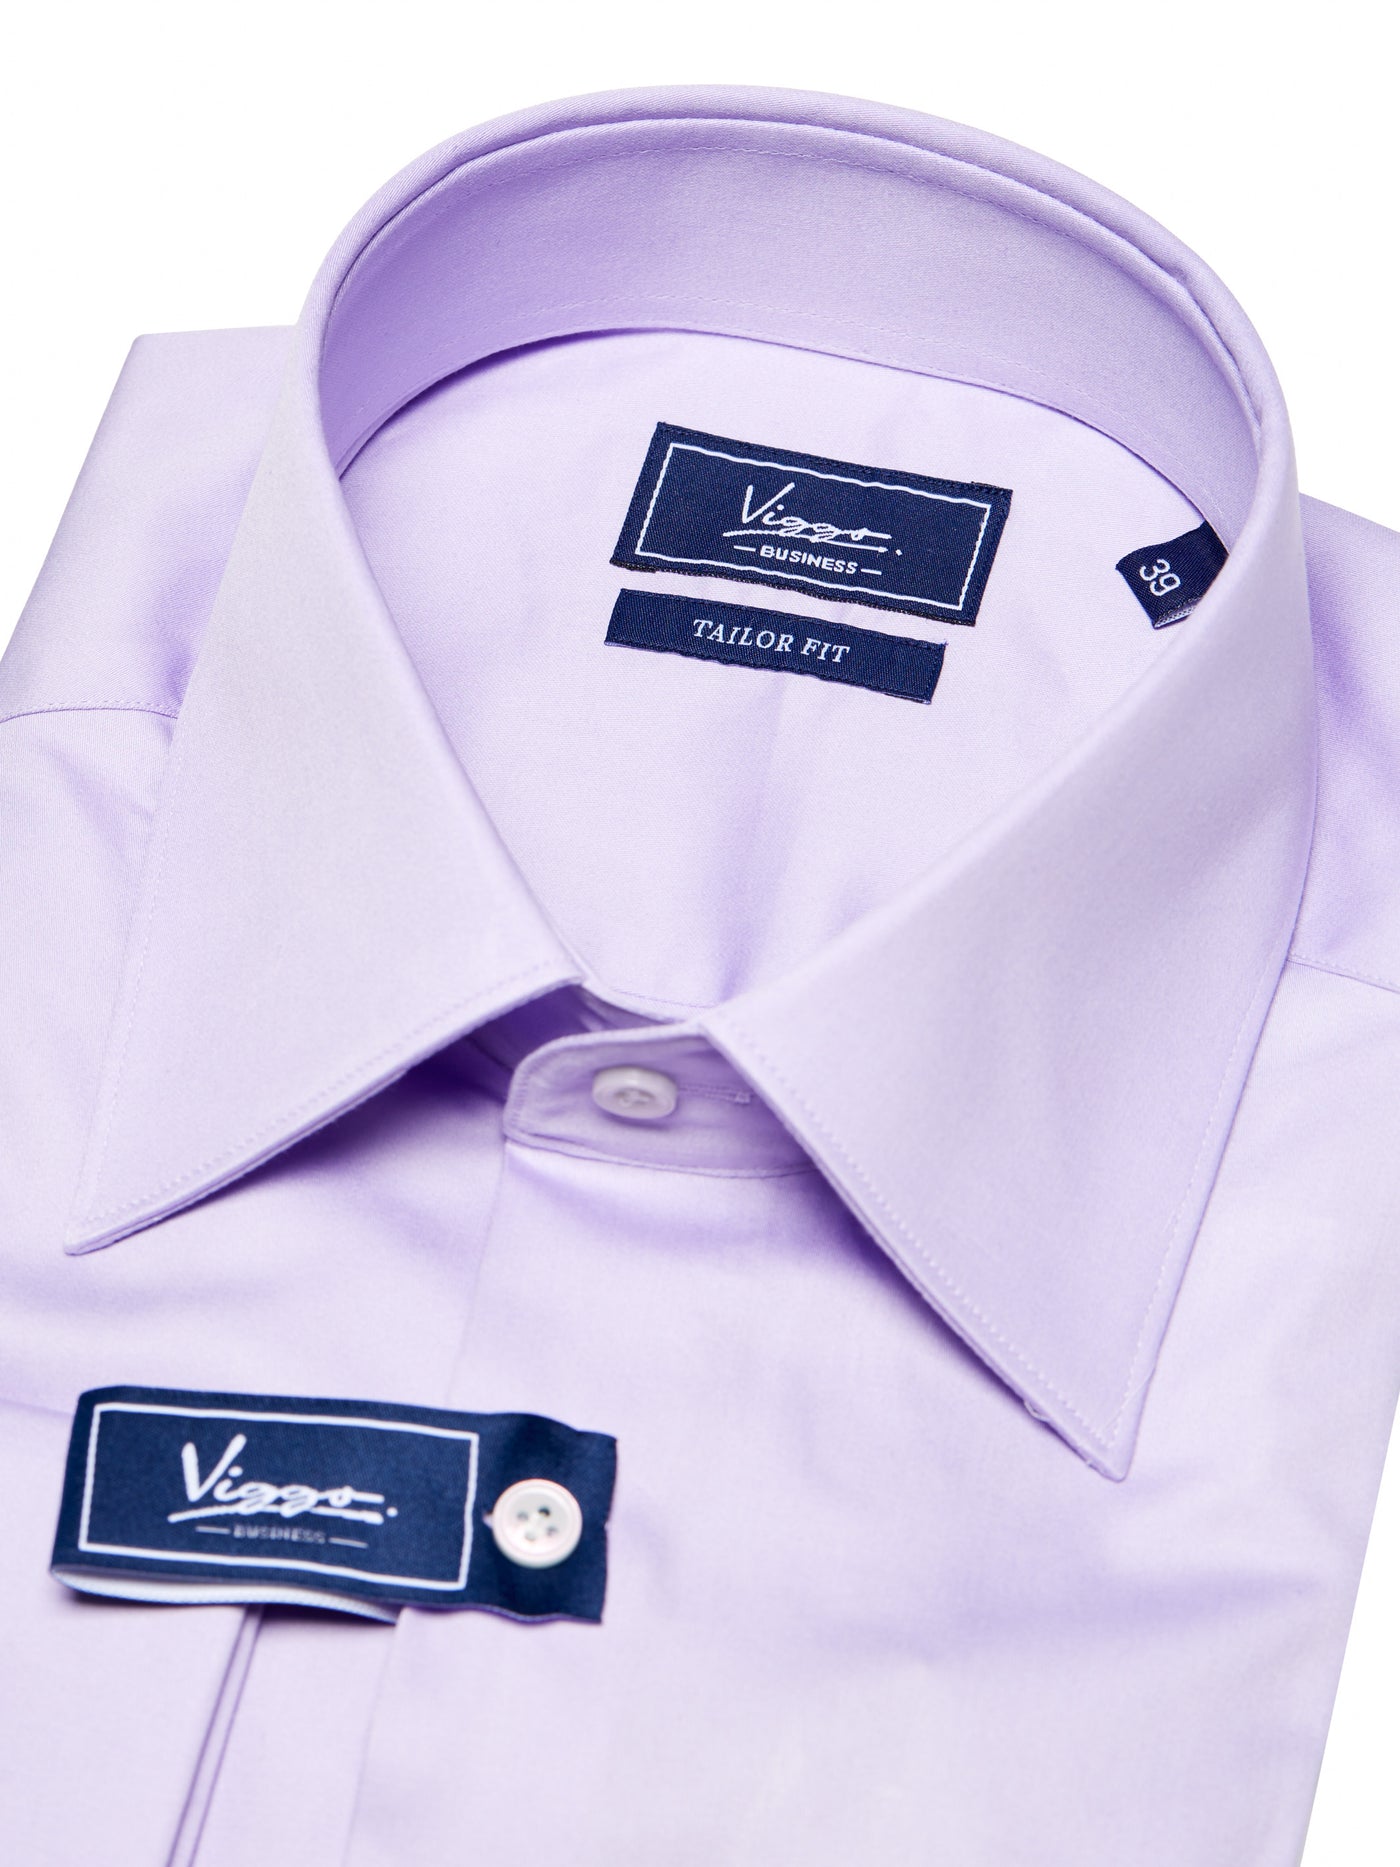 Lilac shirt, button cuffs